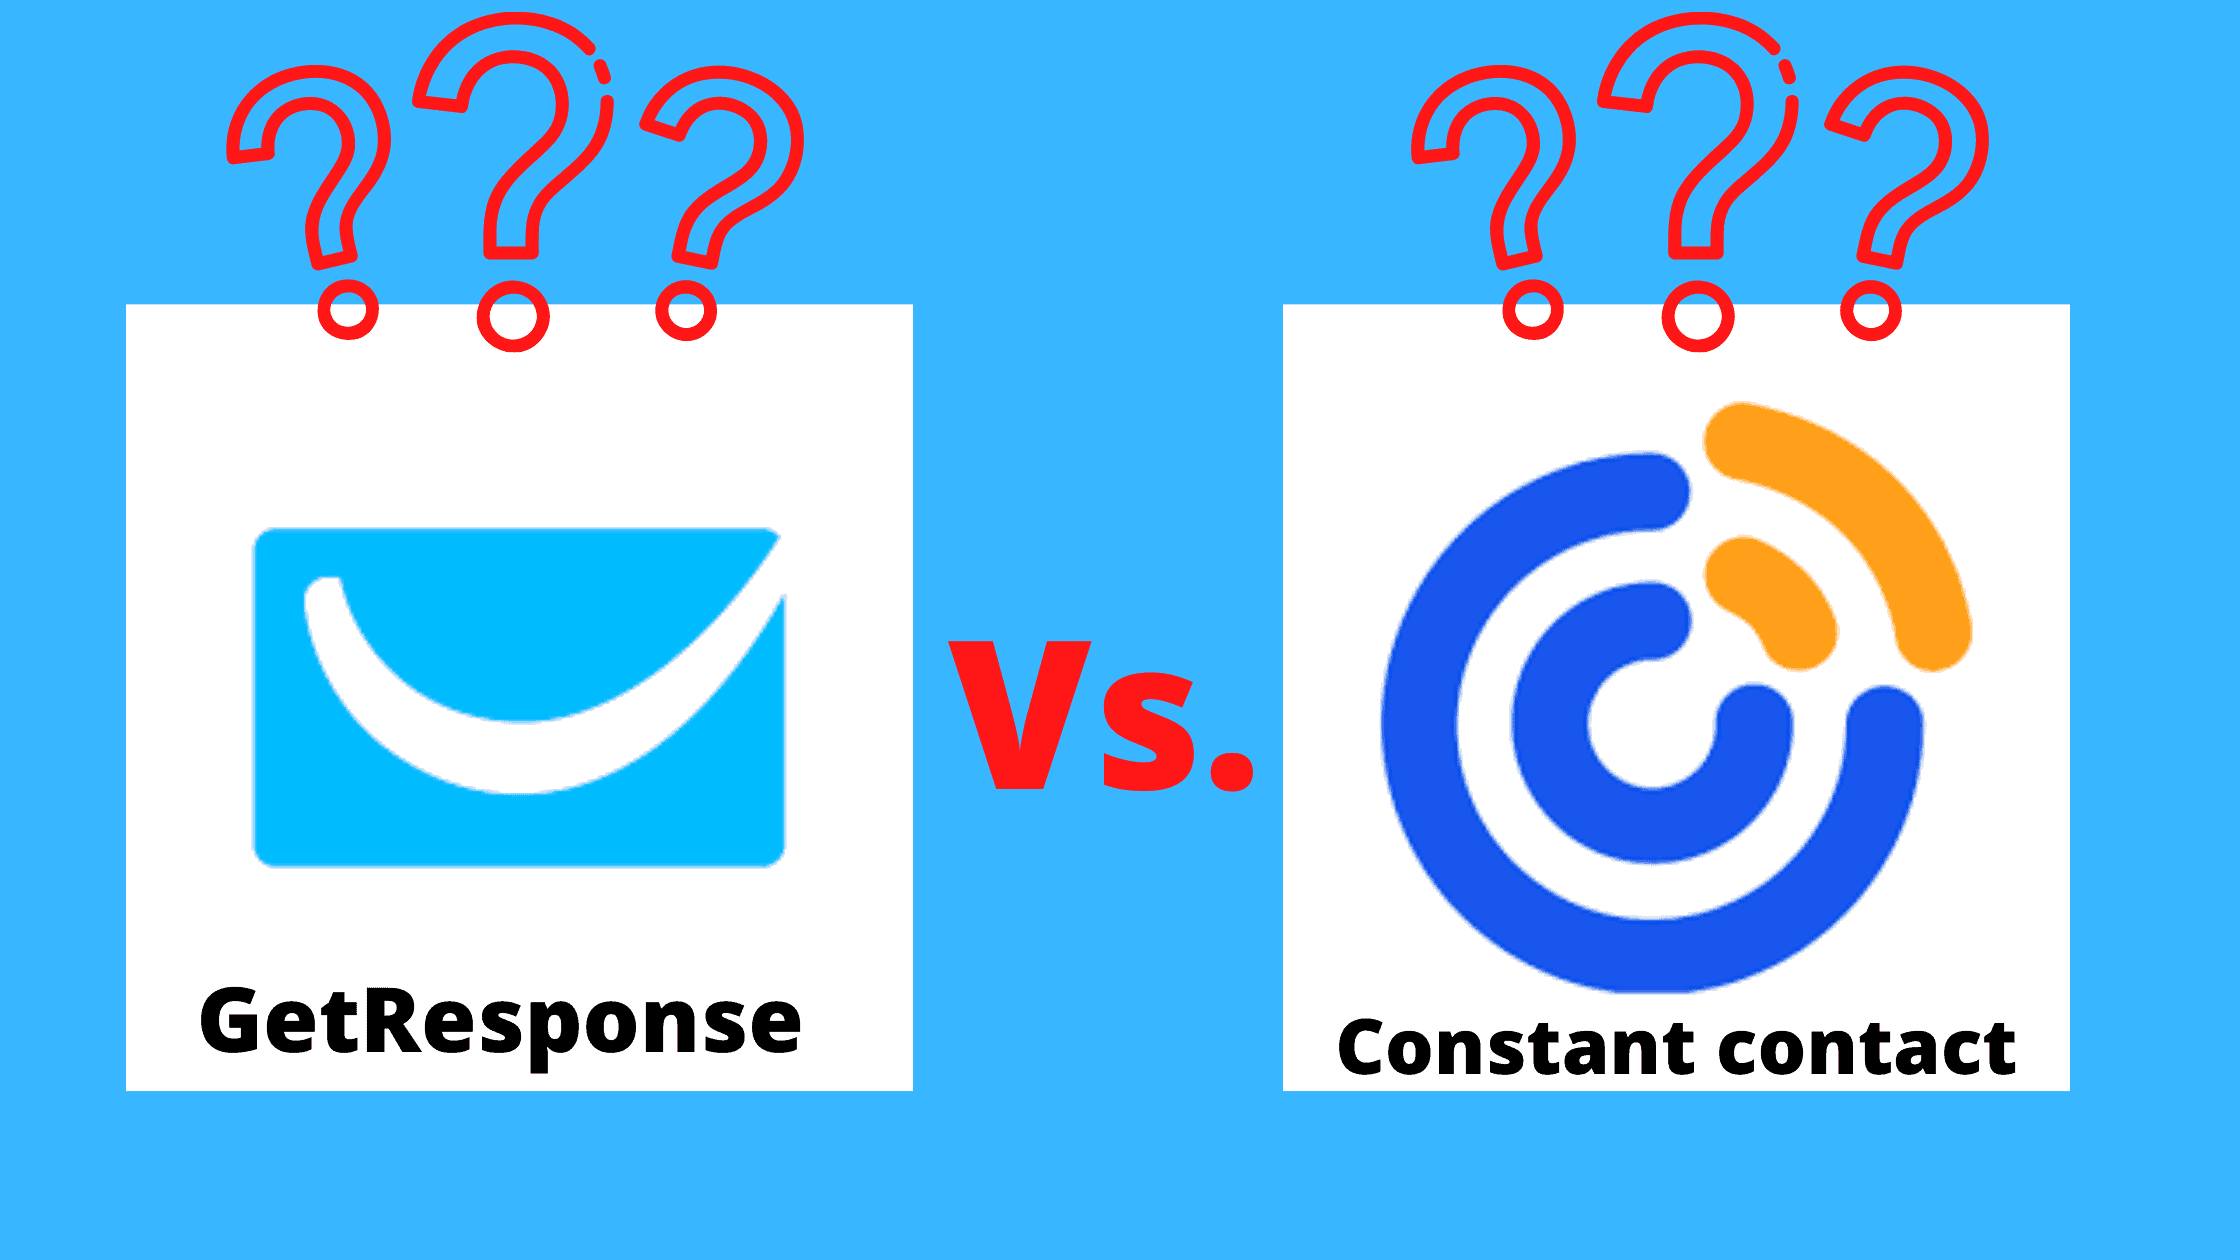 Constant contact vs. GetResponse